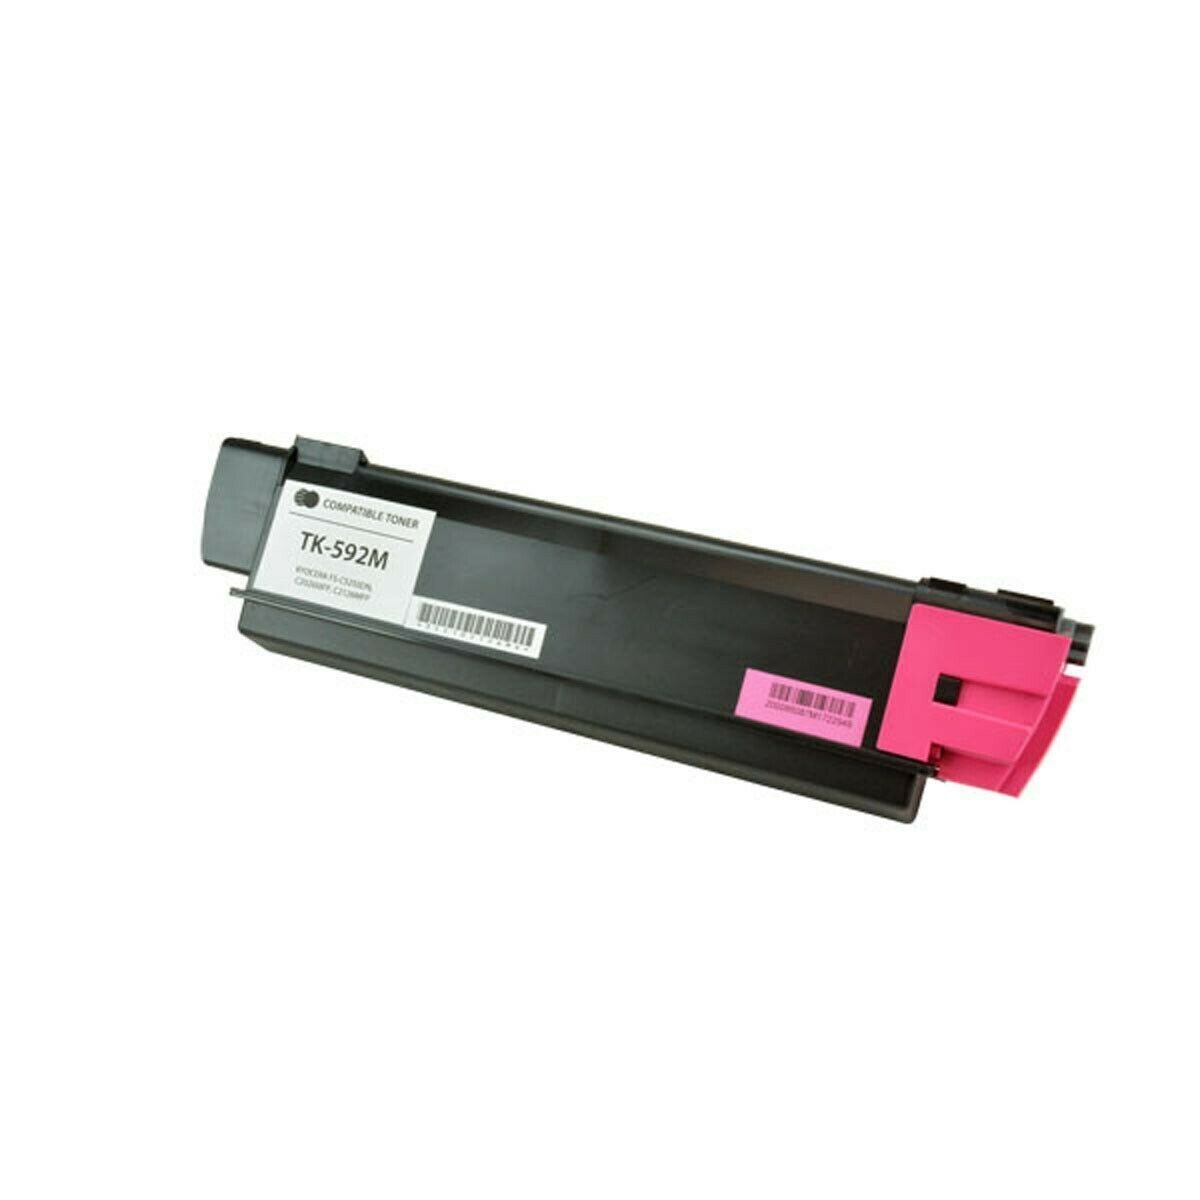 High-Quality Compatible Magenta Toner Cartridge for Kyocera Mita TK592M TK-592M - Fits M6026cidn 6526cdn - image 1 of 1